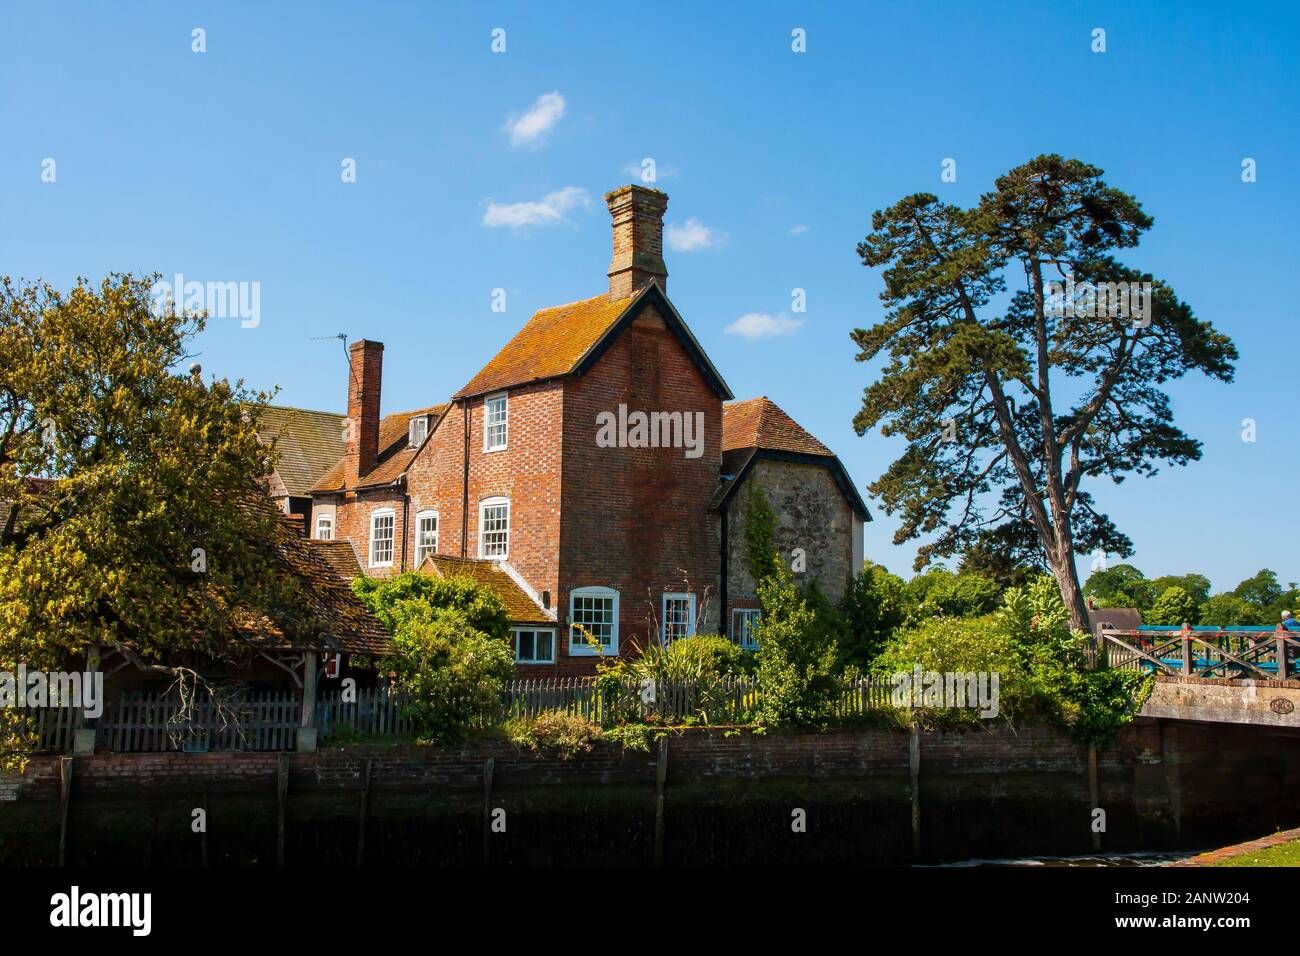 10 Giugno 2015 Un bellissimo esempio di Elizabethan - architettura Tudor accanto al fiume Beaulieu in Beaulieu Village Hampshire Inghilterra Foto Stock